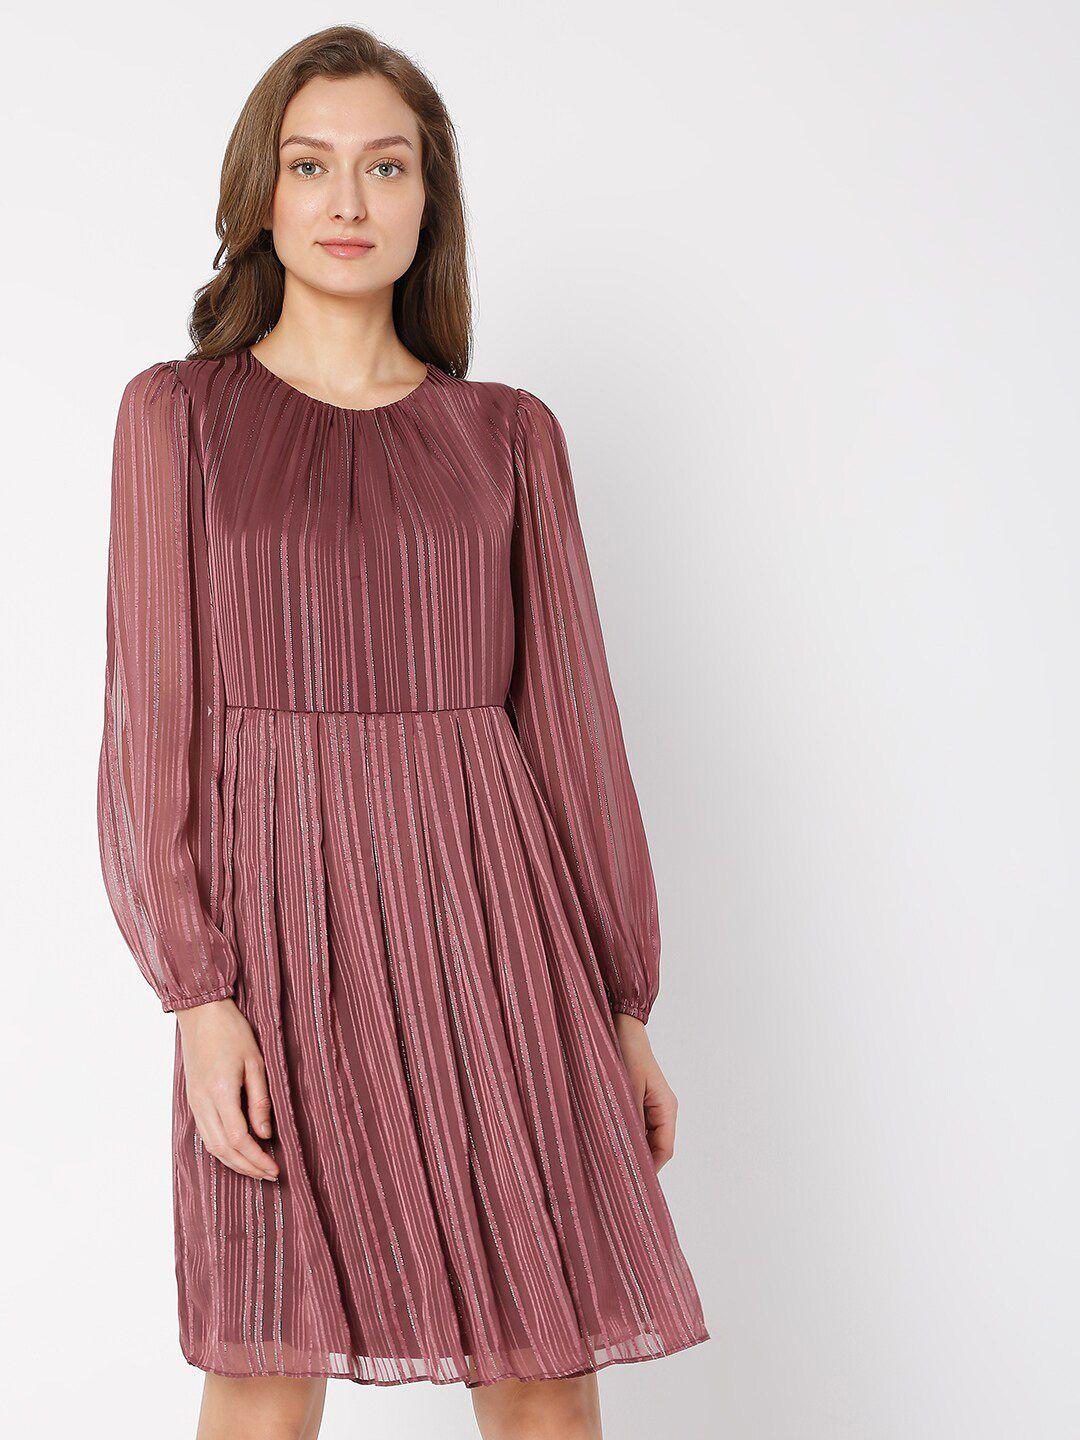 vero moda purple striped dress